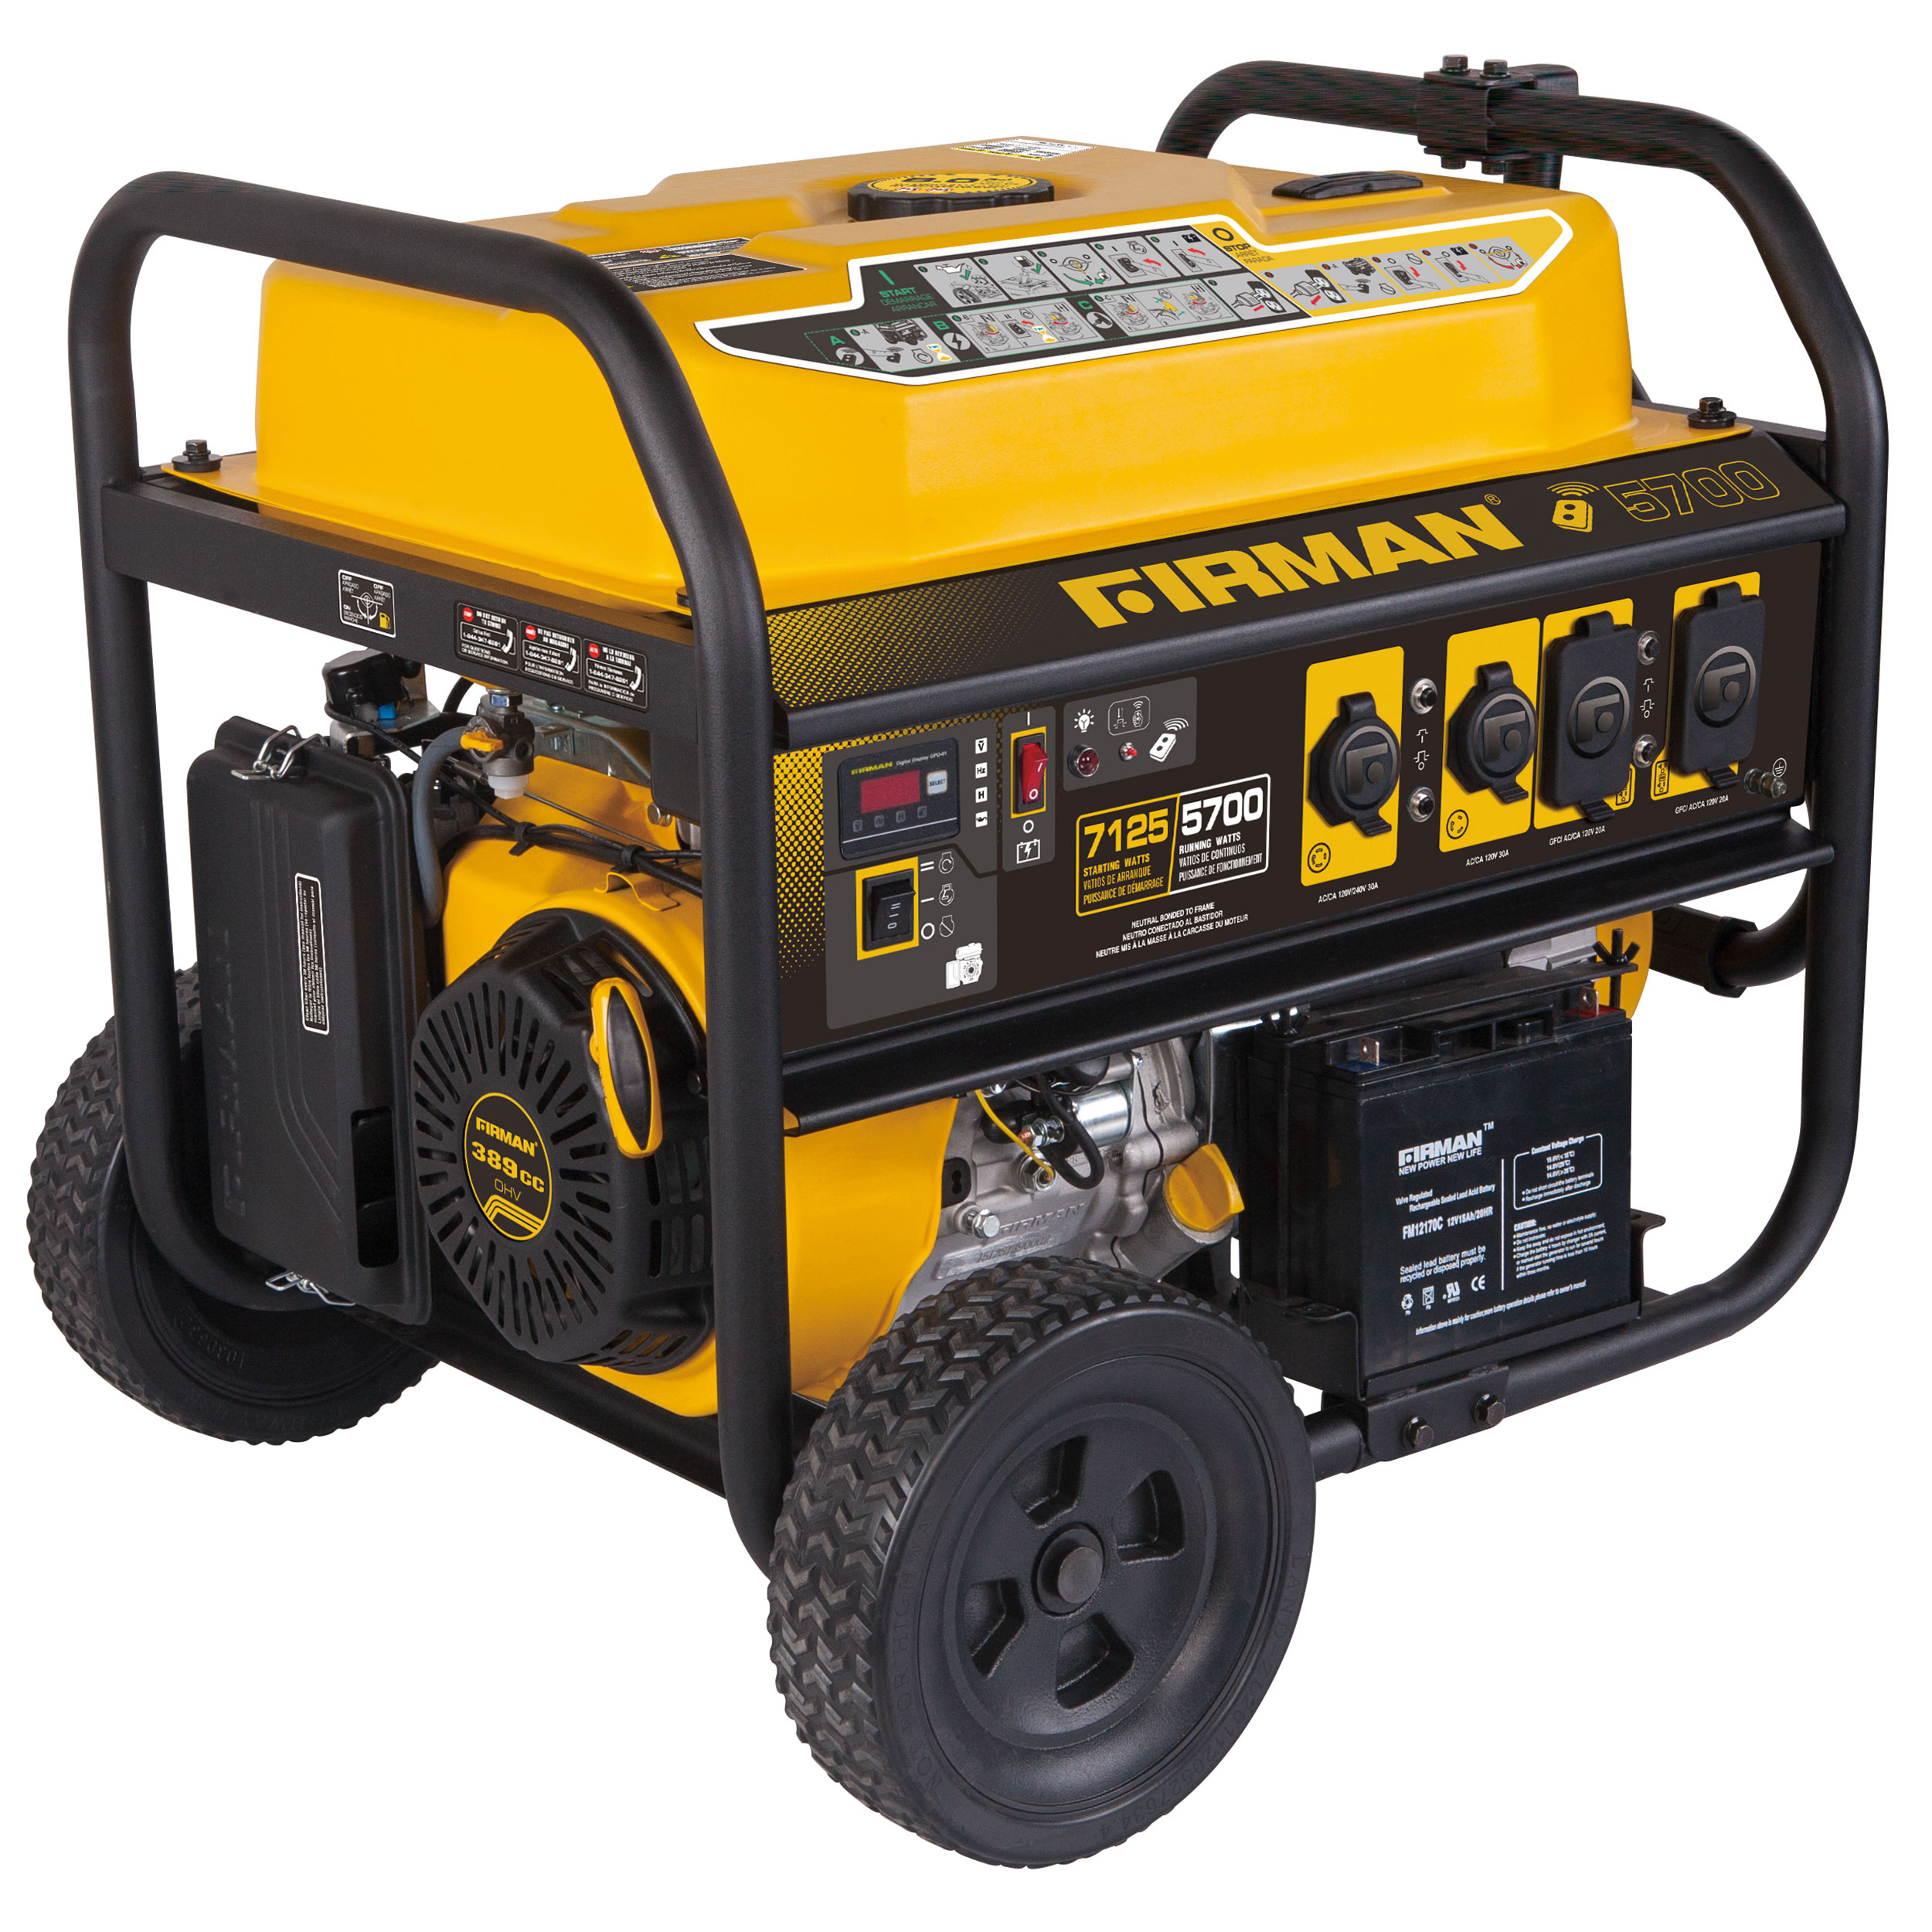 P05702 5700/7125 Watt Portable Remote Start Gas Generator